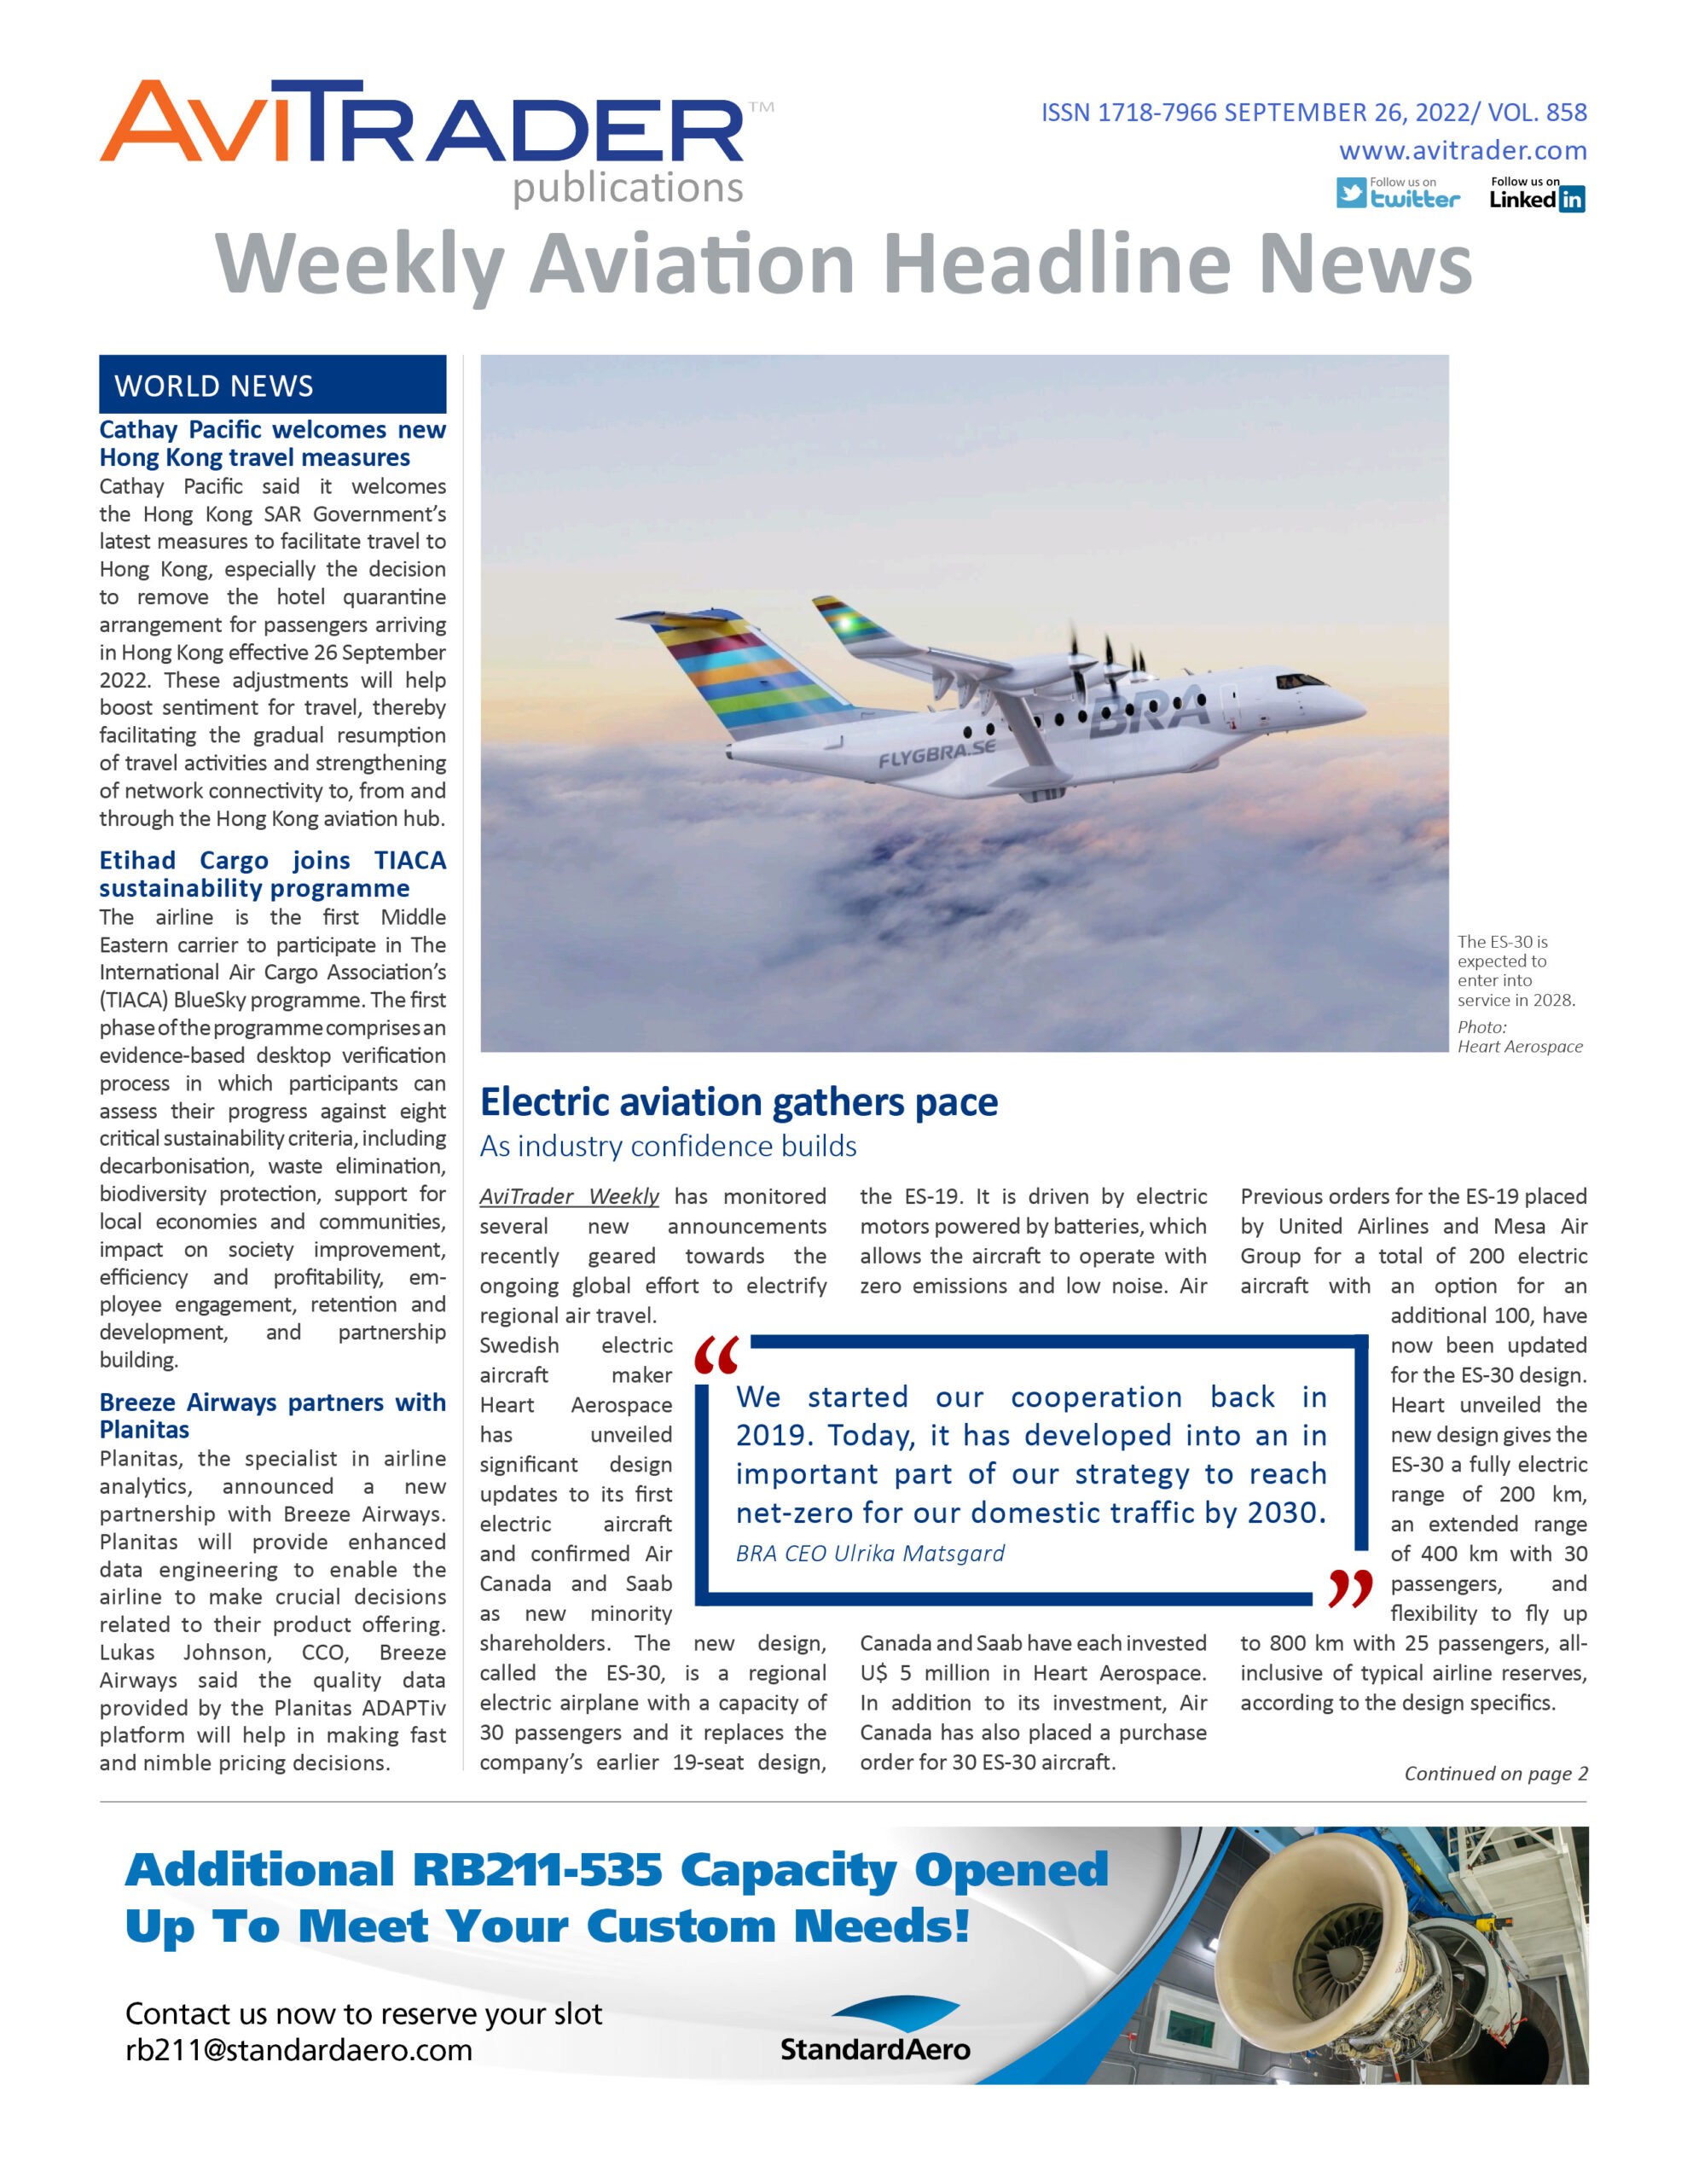 AviTrader_Weekly_Headline_News_Cover_2022-09-26